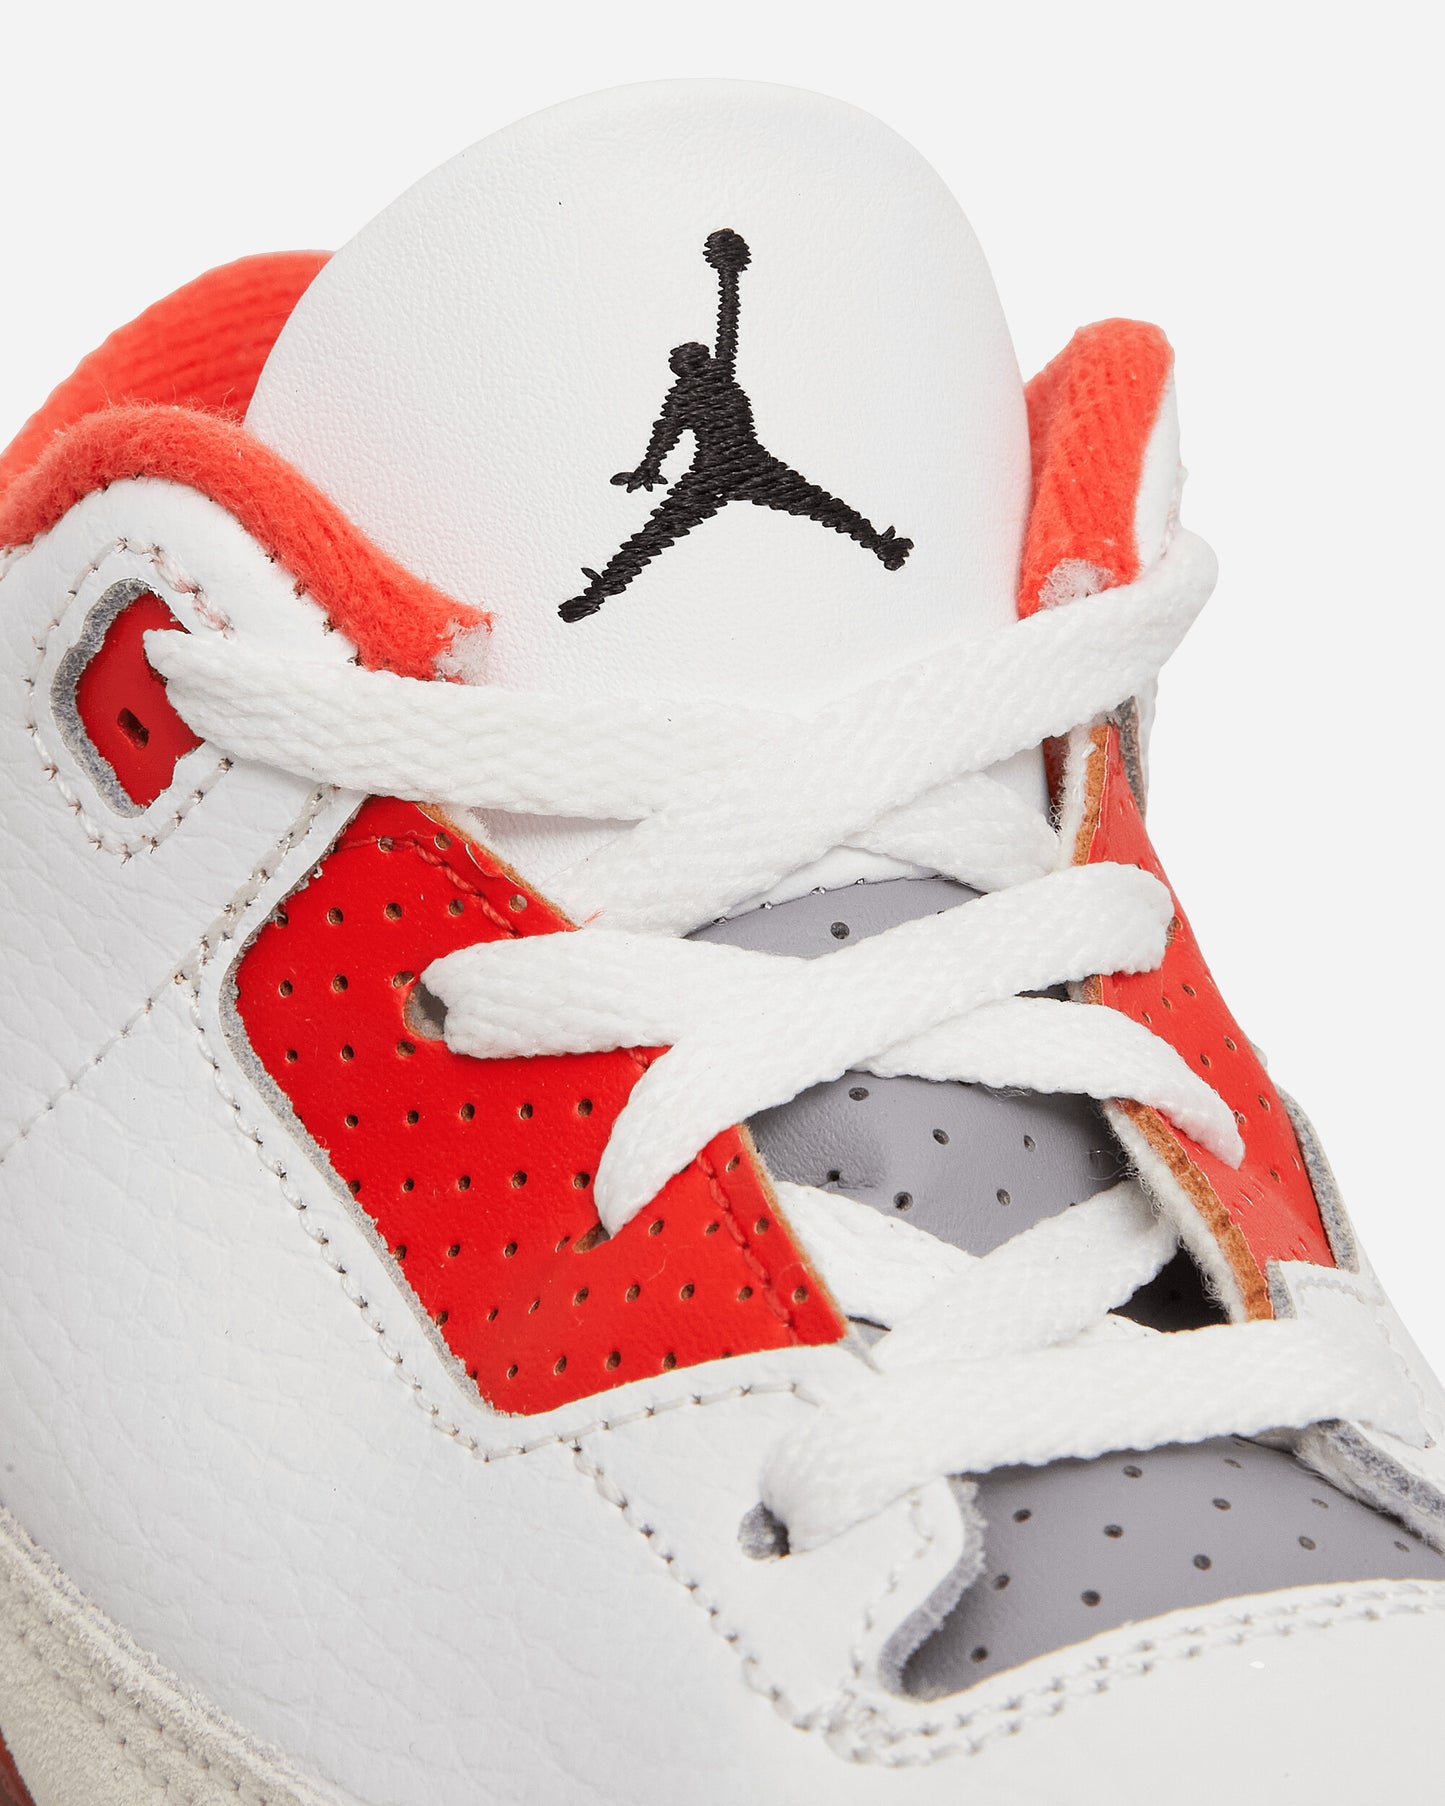 Nike Jordan Jordan 3 Retro Se (Td) White/Black Sneakers Low DV7026-108